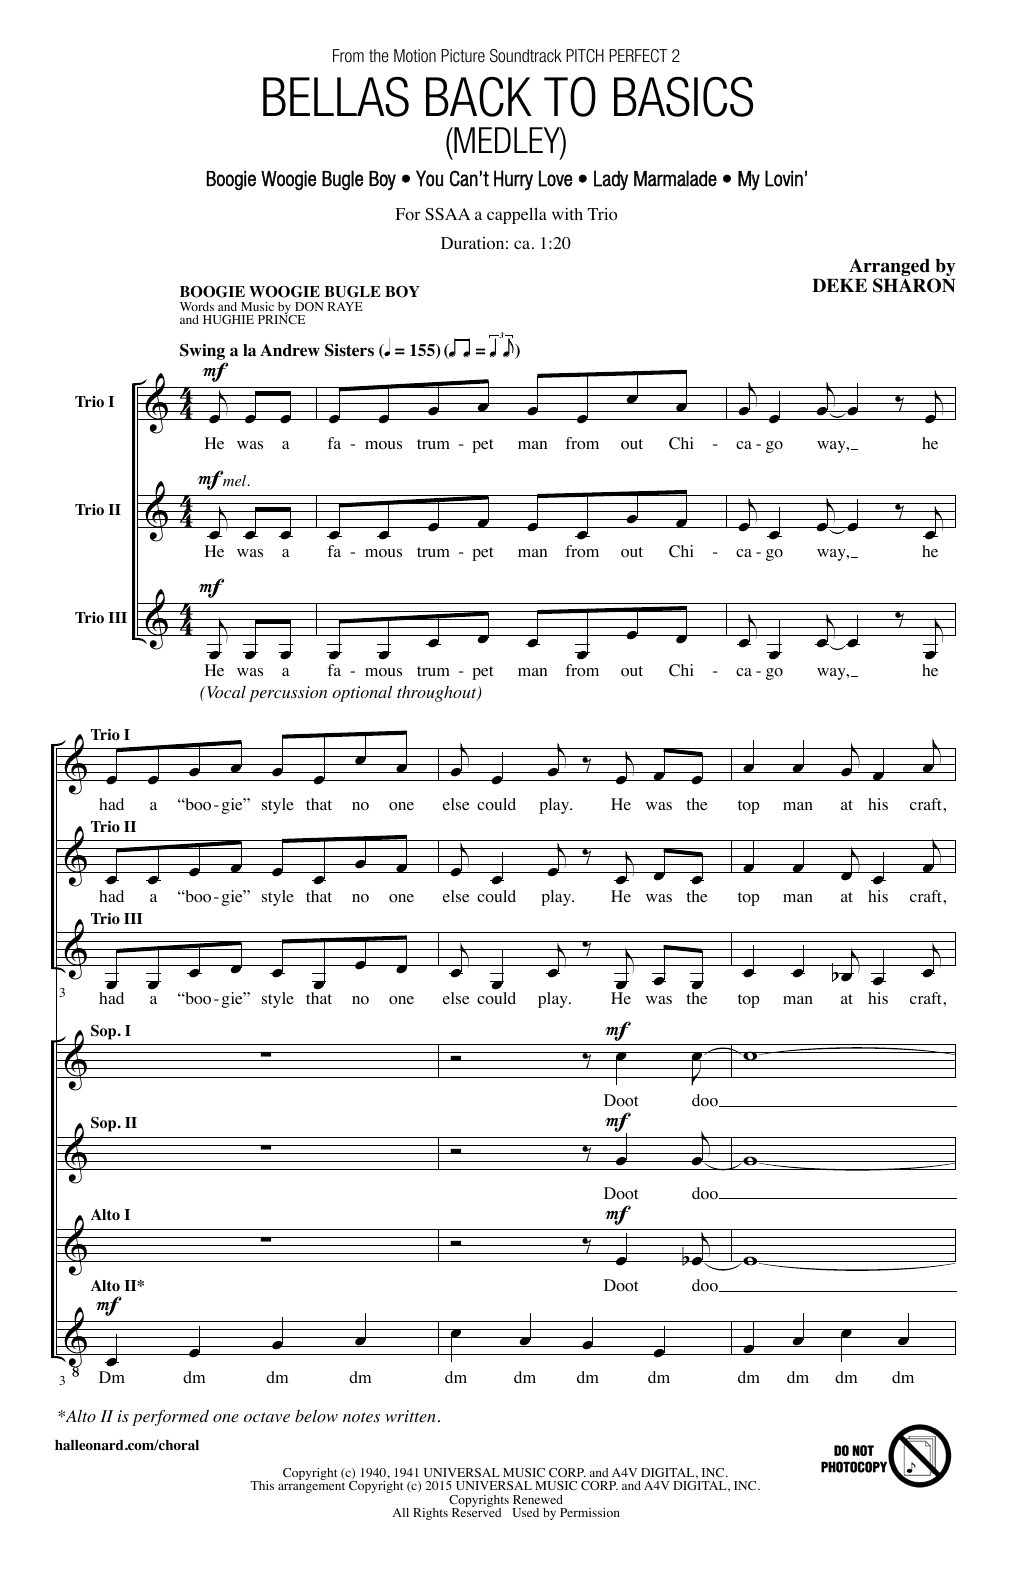 Deke Sharon Bellas Back To Basics (Medley) sheet music notes and chords arranged for SSA Choir